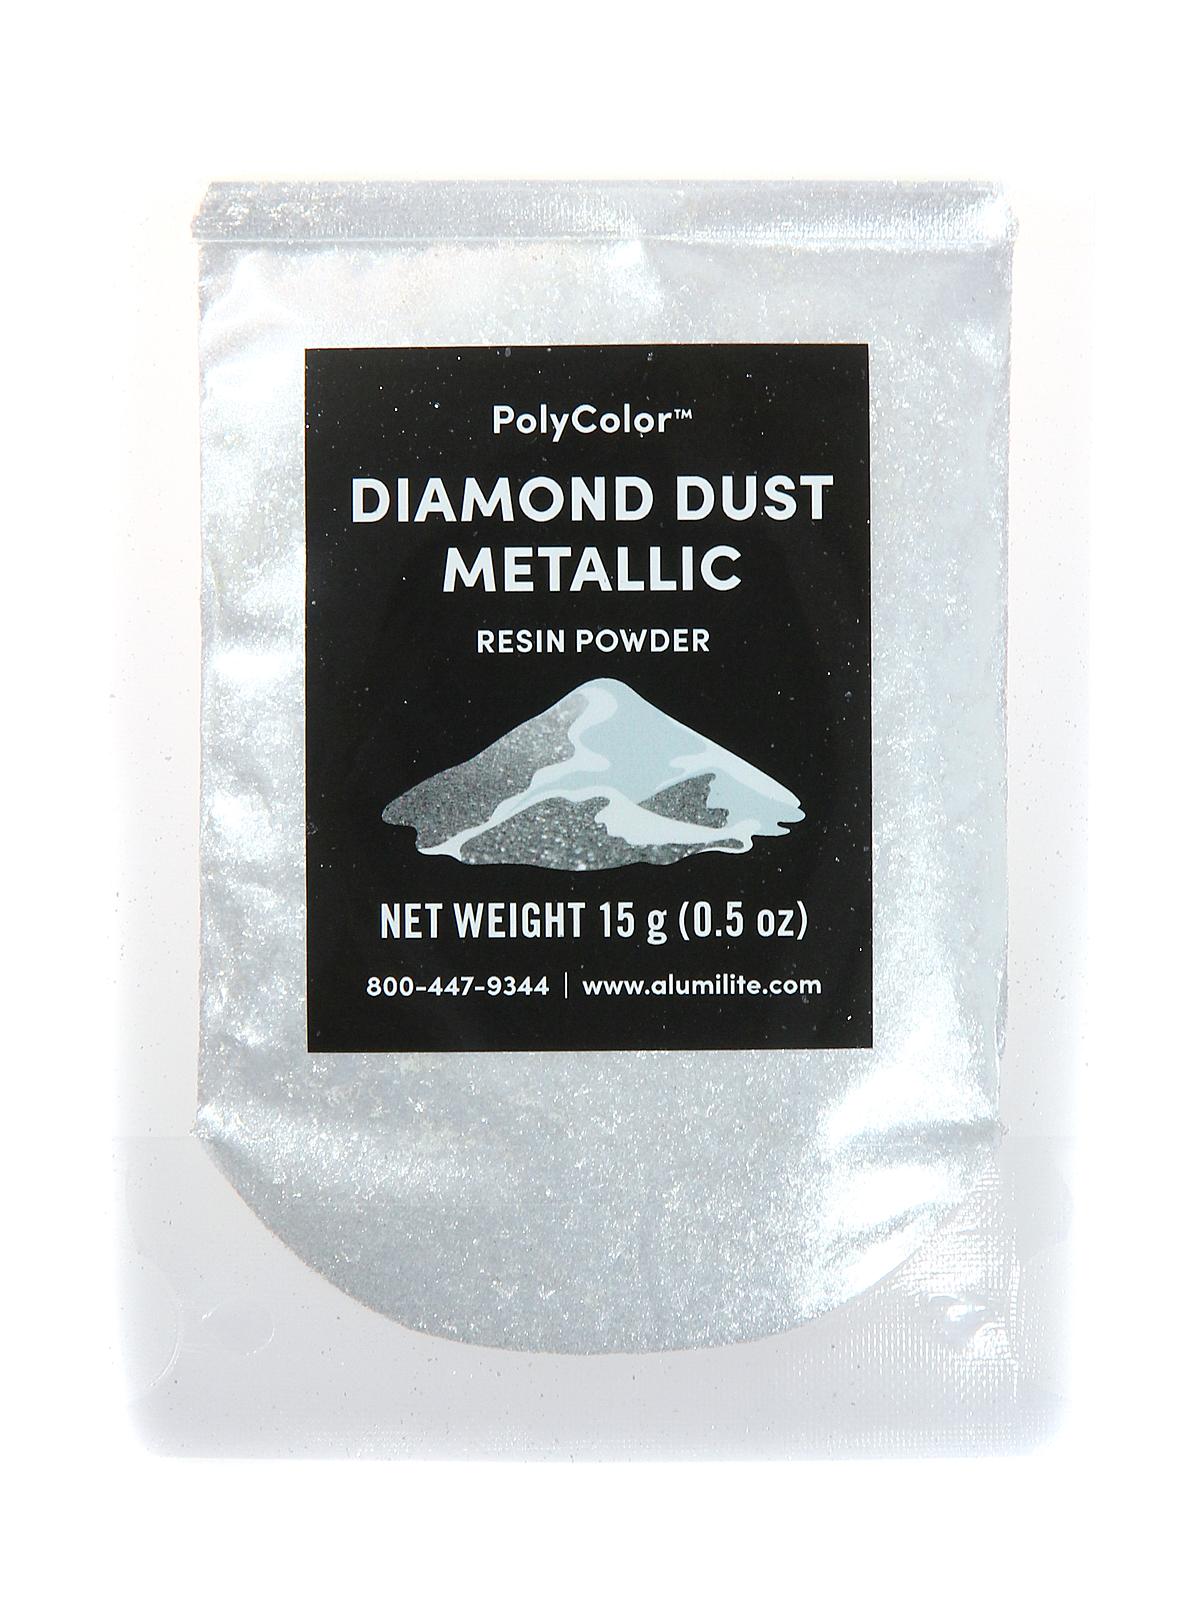 PolyColor Resin Powder Diamond Dust Metallic Bag 15 G (0.5 Oz.)